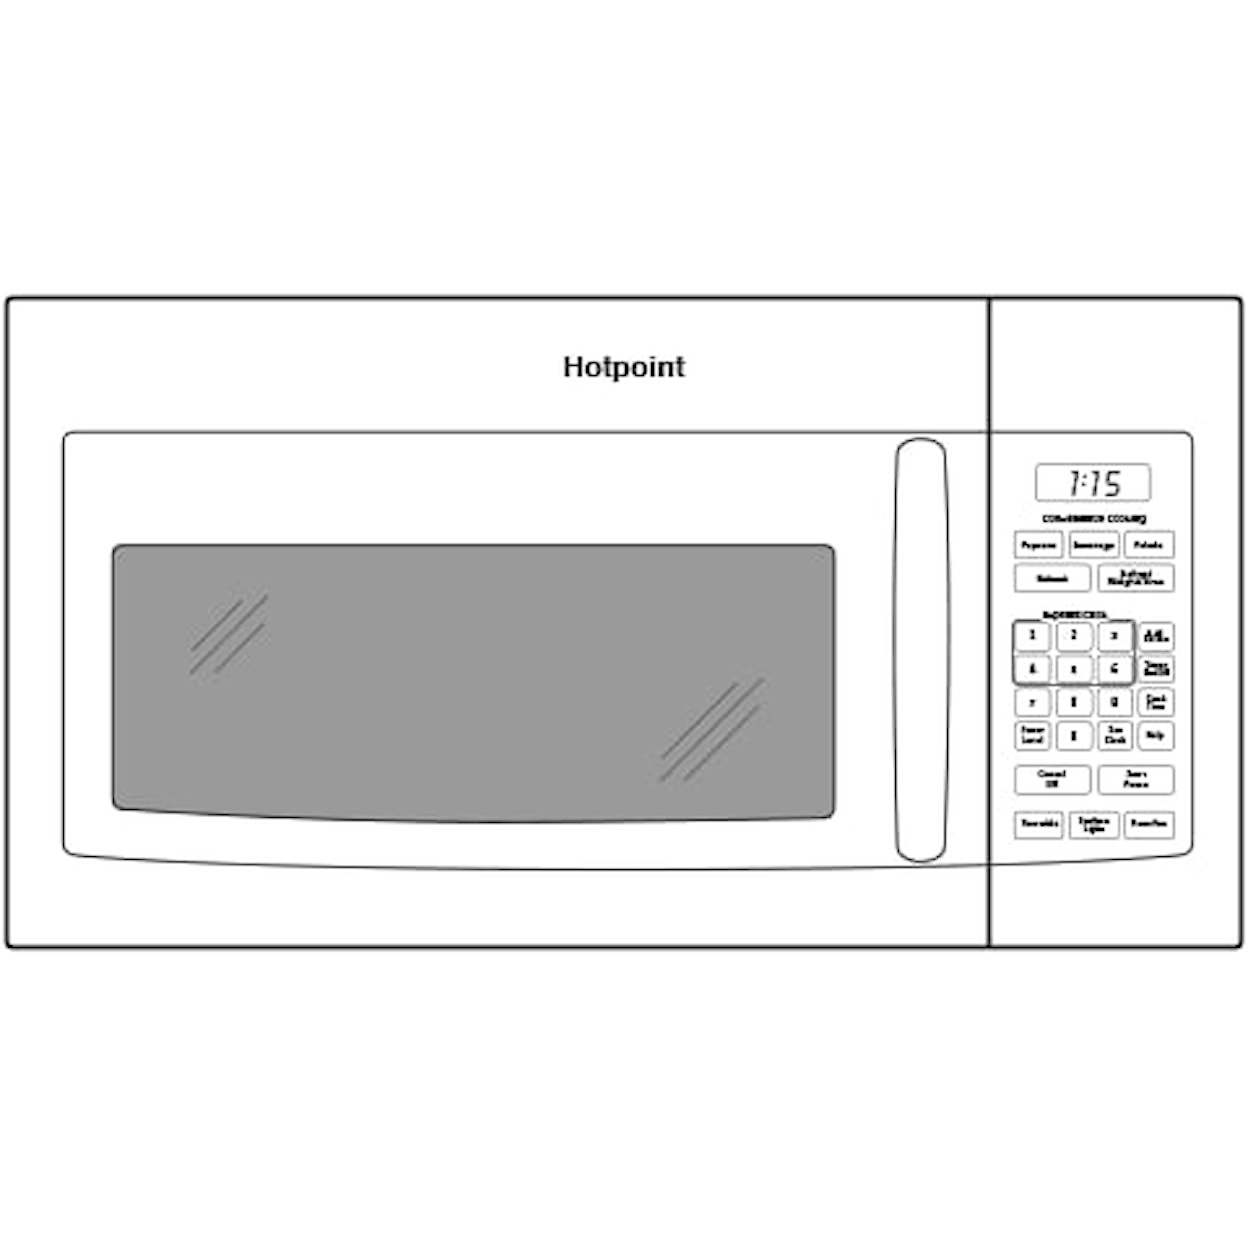 Hotpoint Microwave Microwave